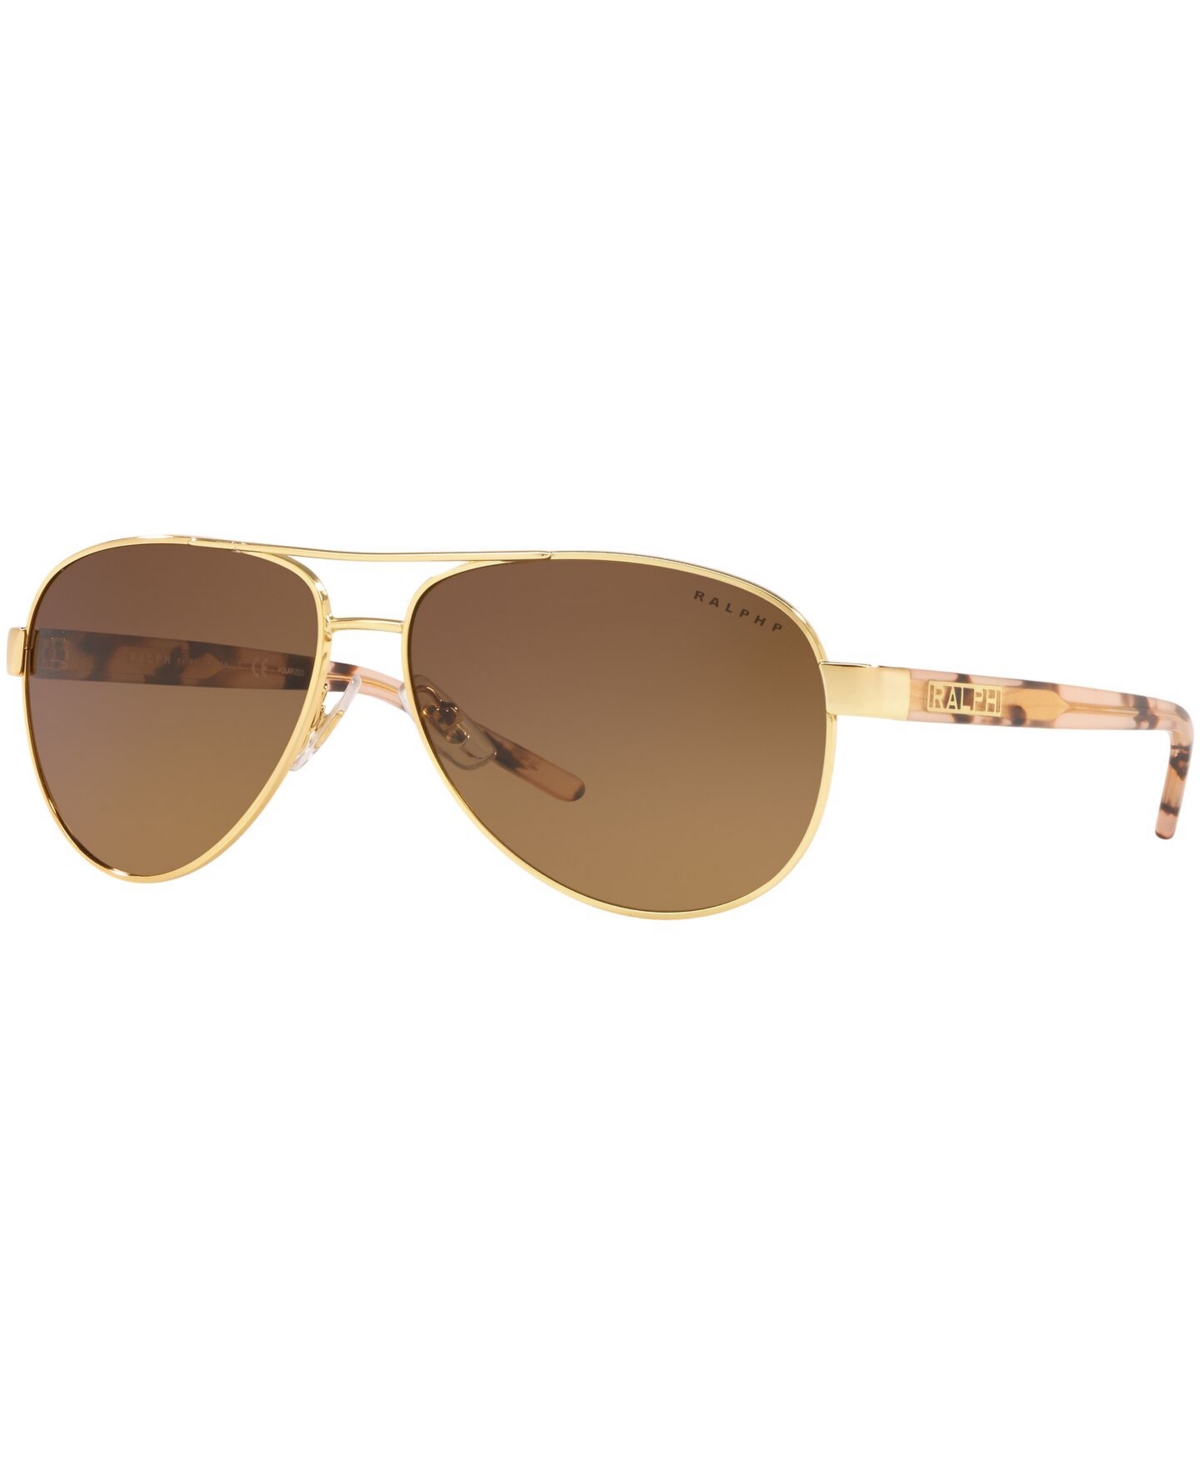 Ralph Polarized Sunglasses, RA4004 59 - GOLD/POLAR YELLOW GRADIENT BROWN